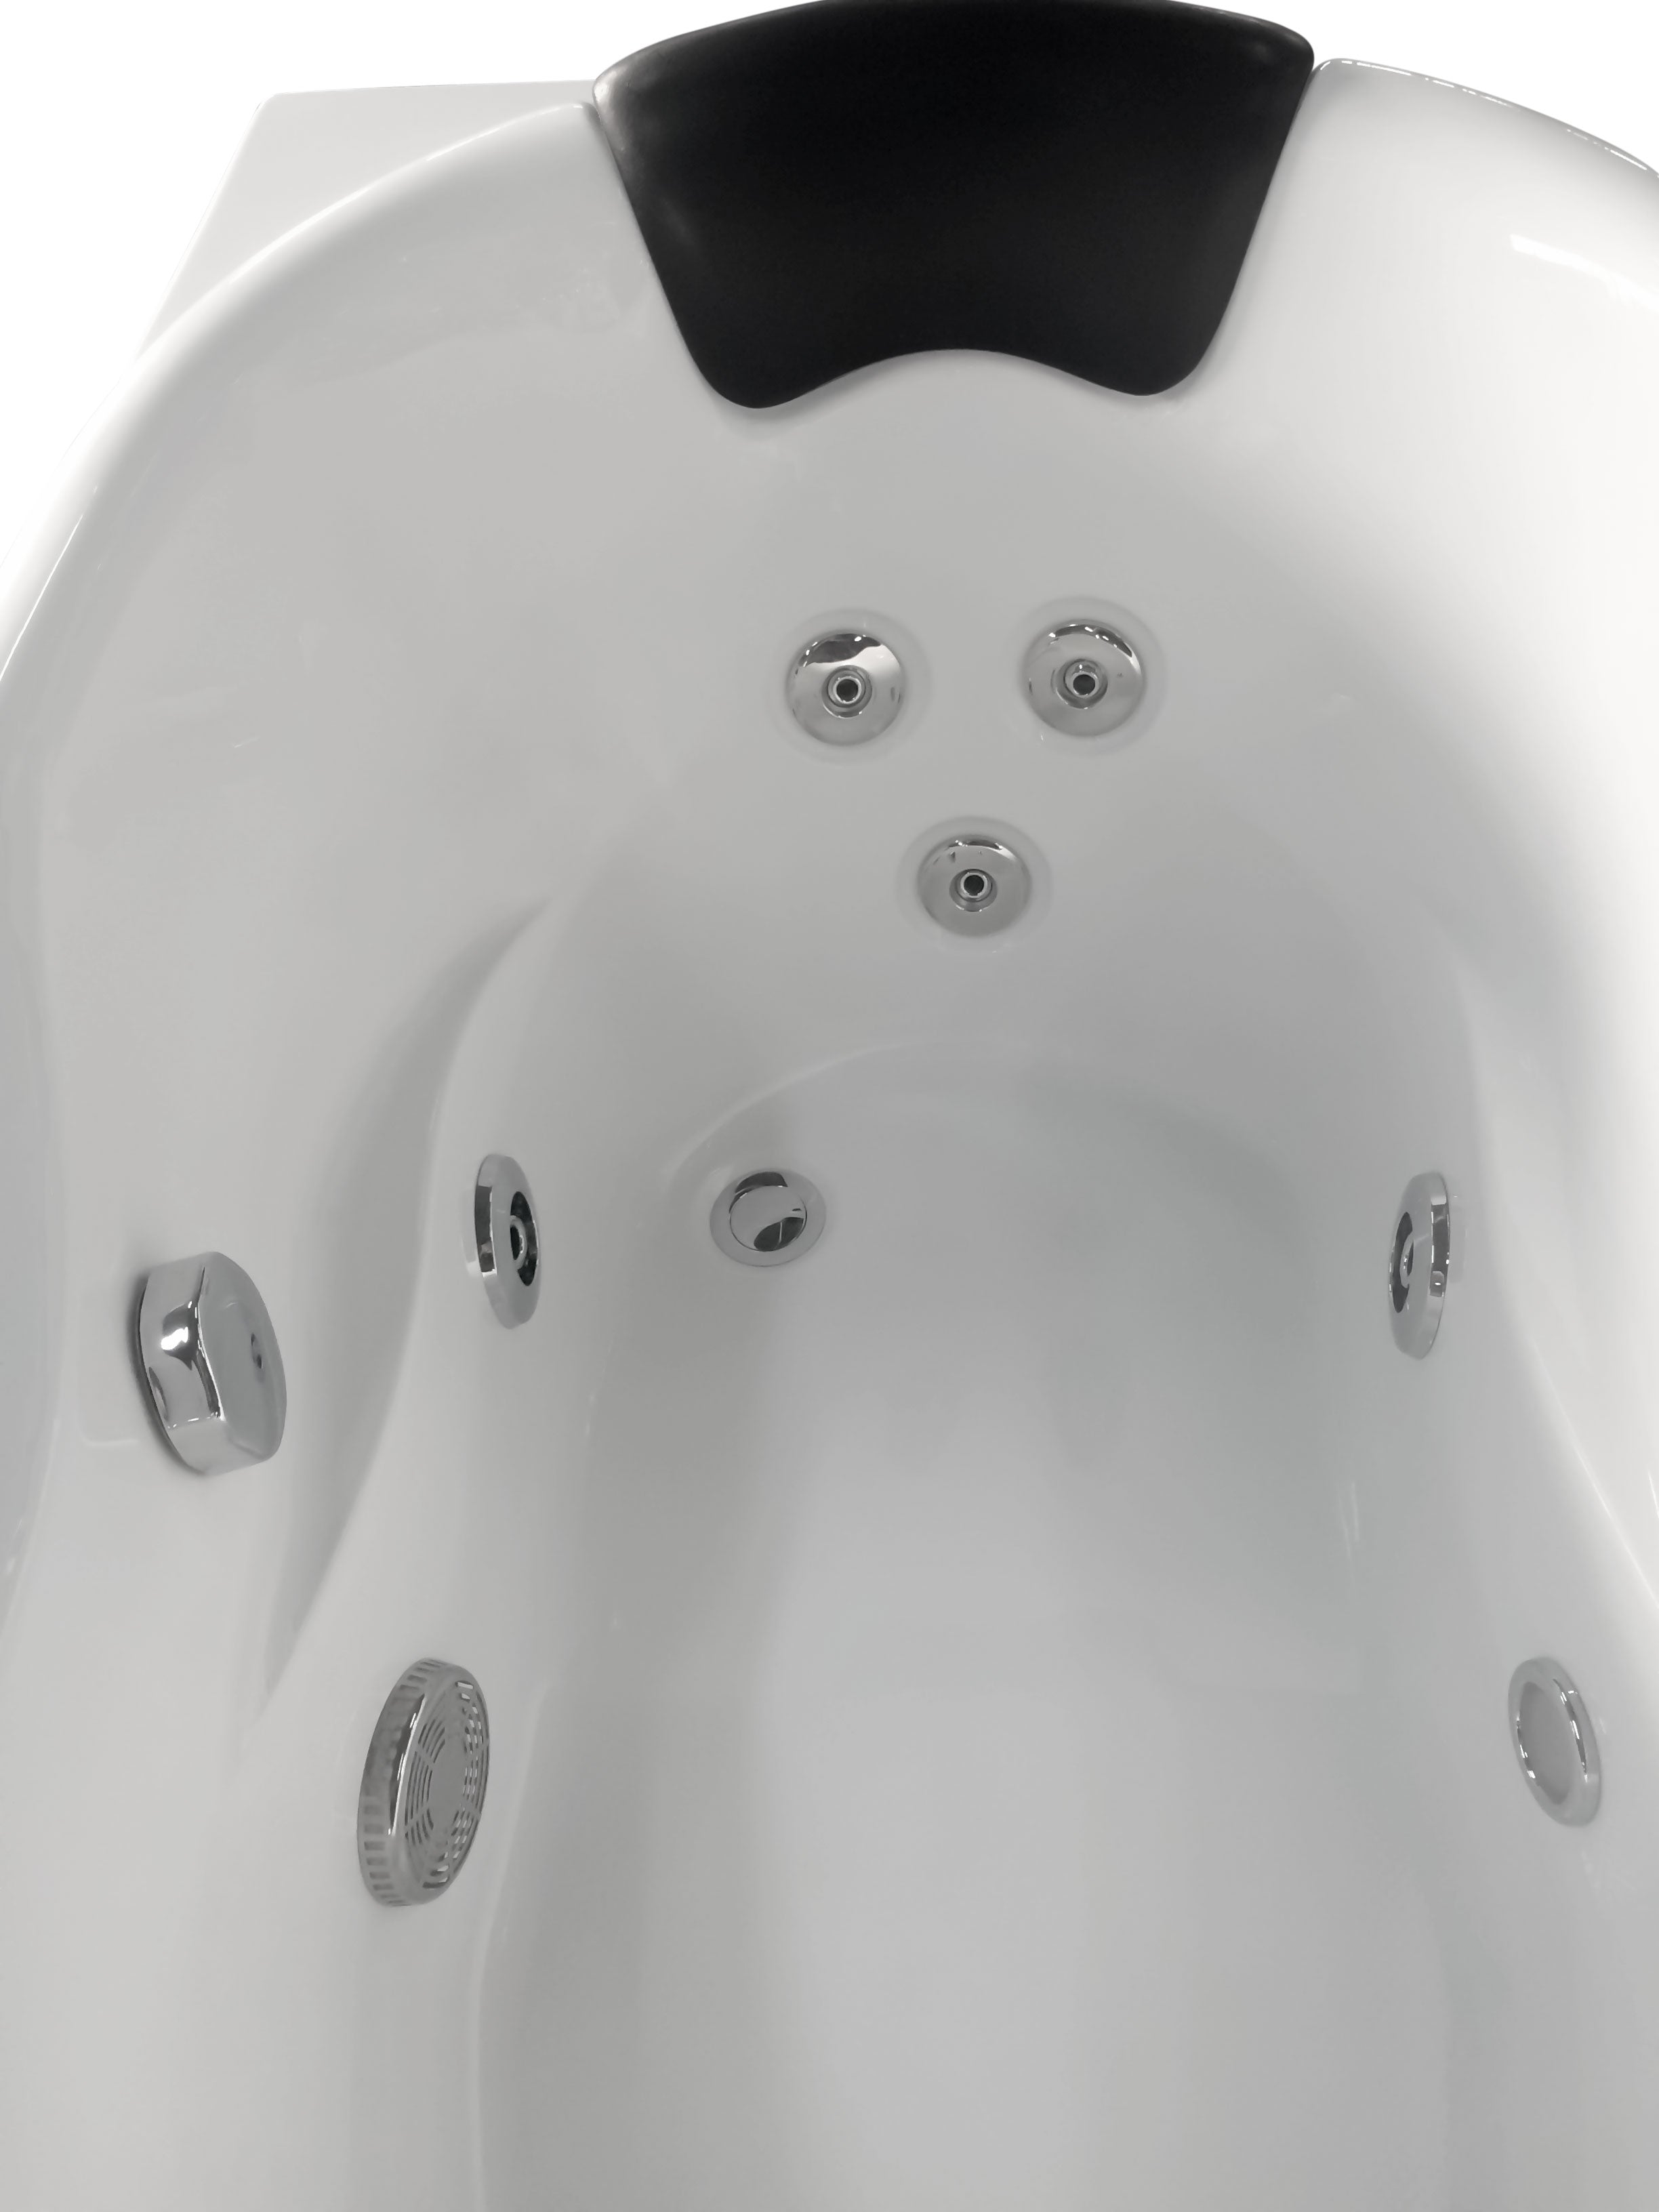 Eago AM175-L 5'' White Acrylic Corner Whirlpool Bathtub - Left Drain